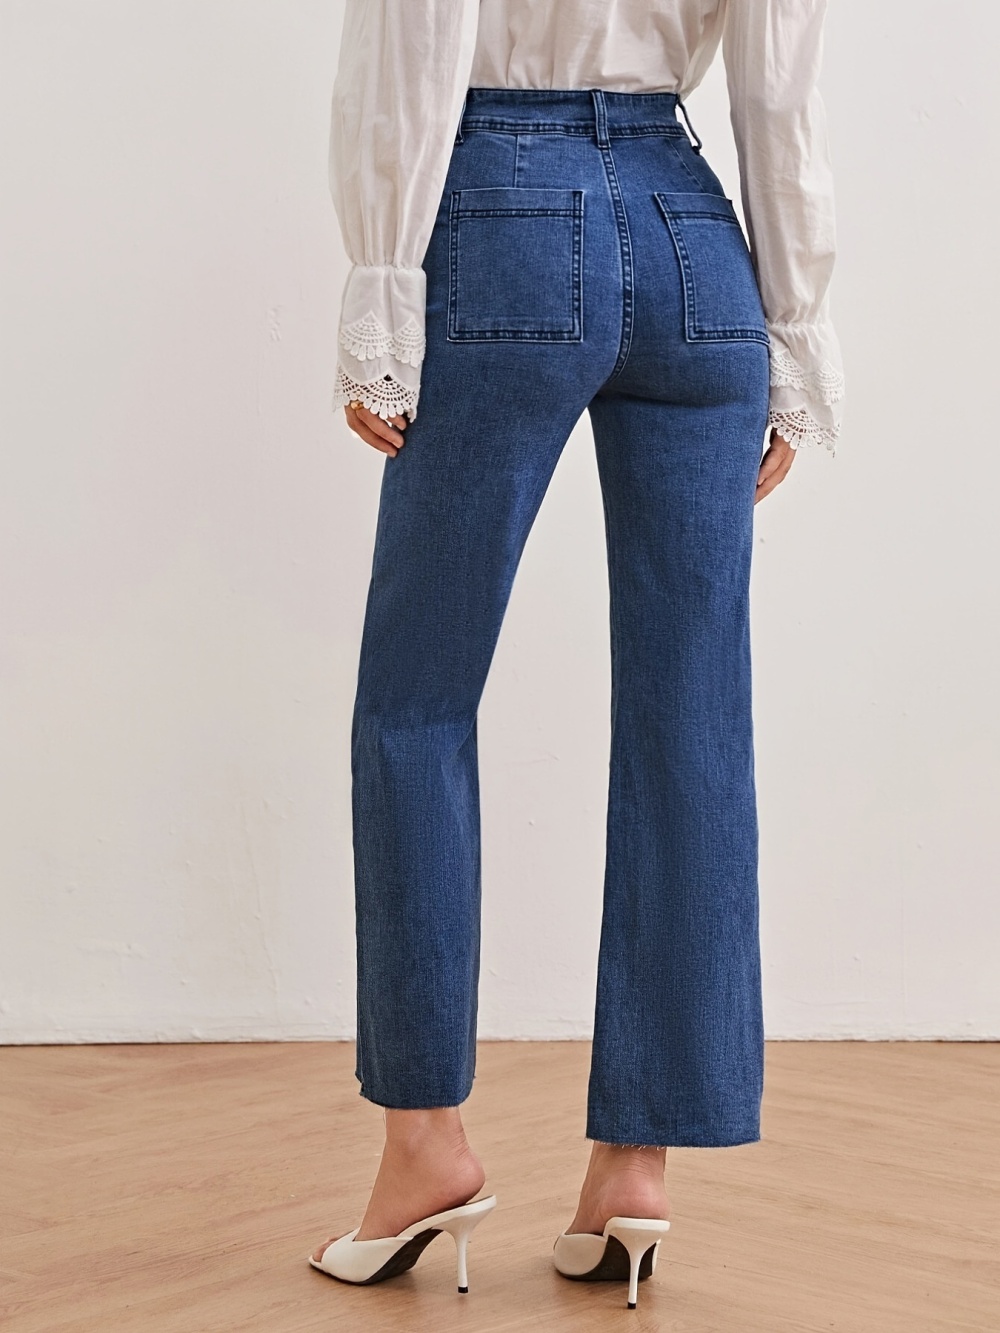 Pocket fashion pants pure jeans for women